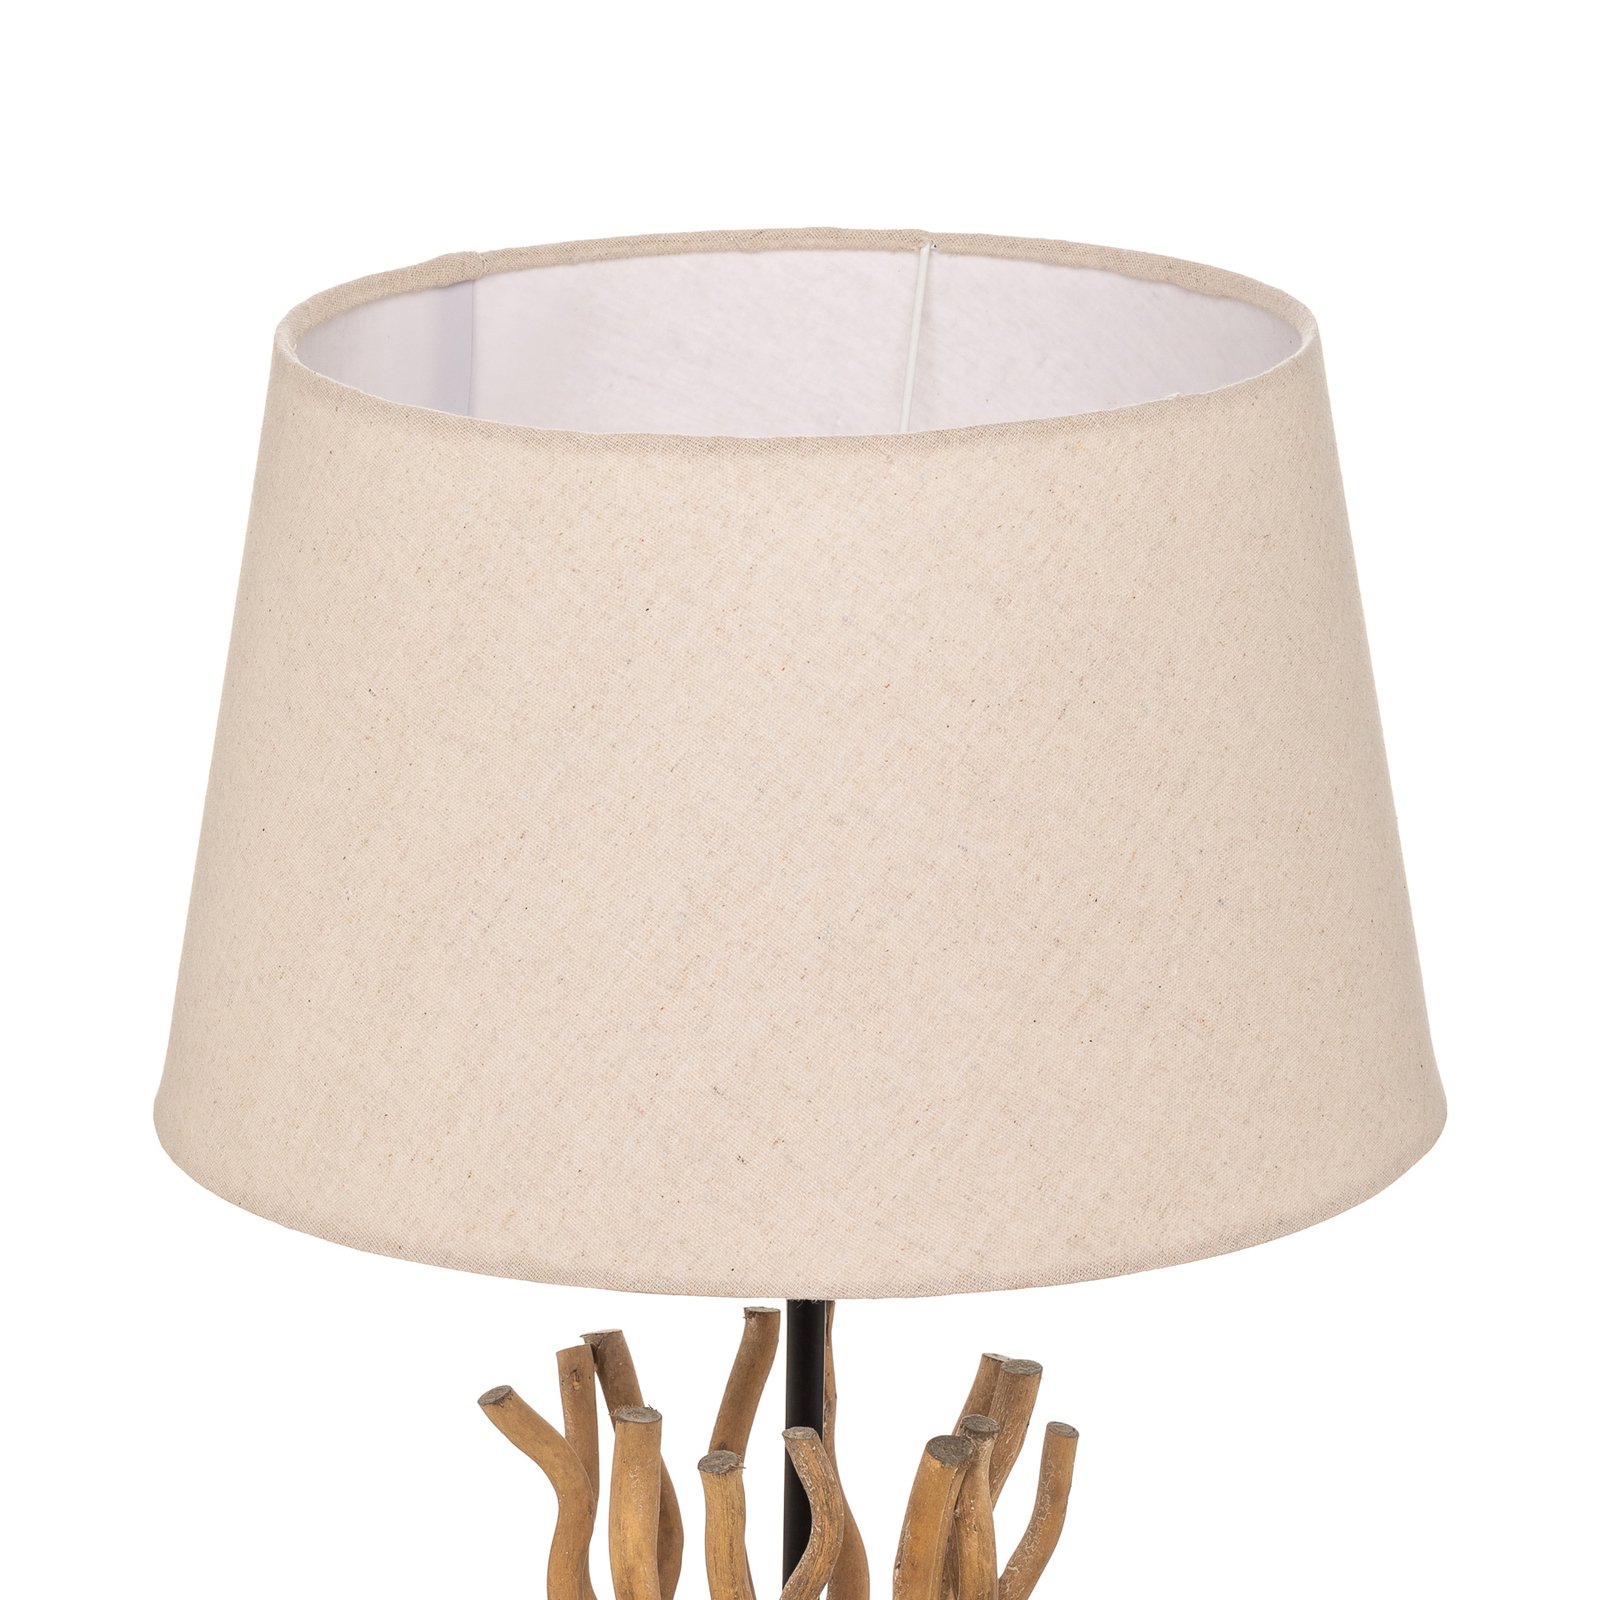 Agar floor lamp, fabric lampshade and wood element